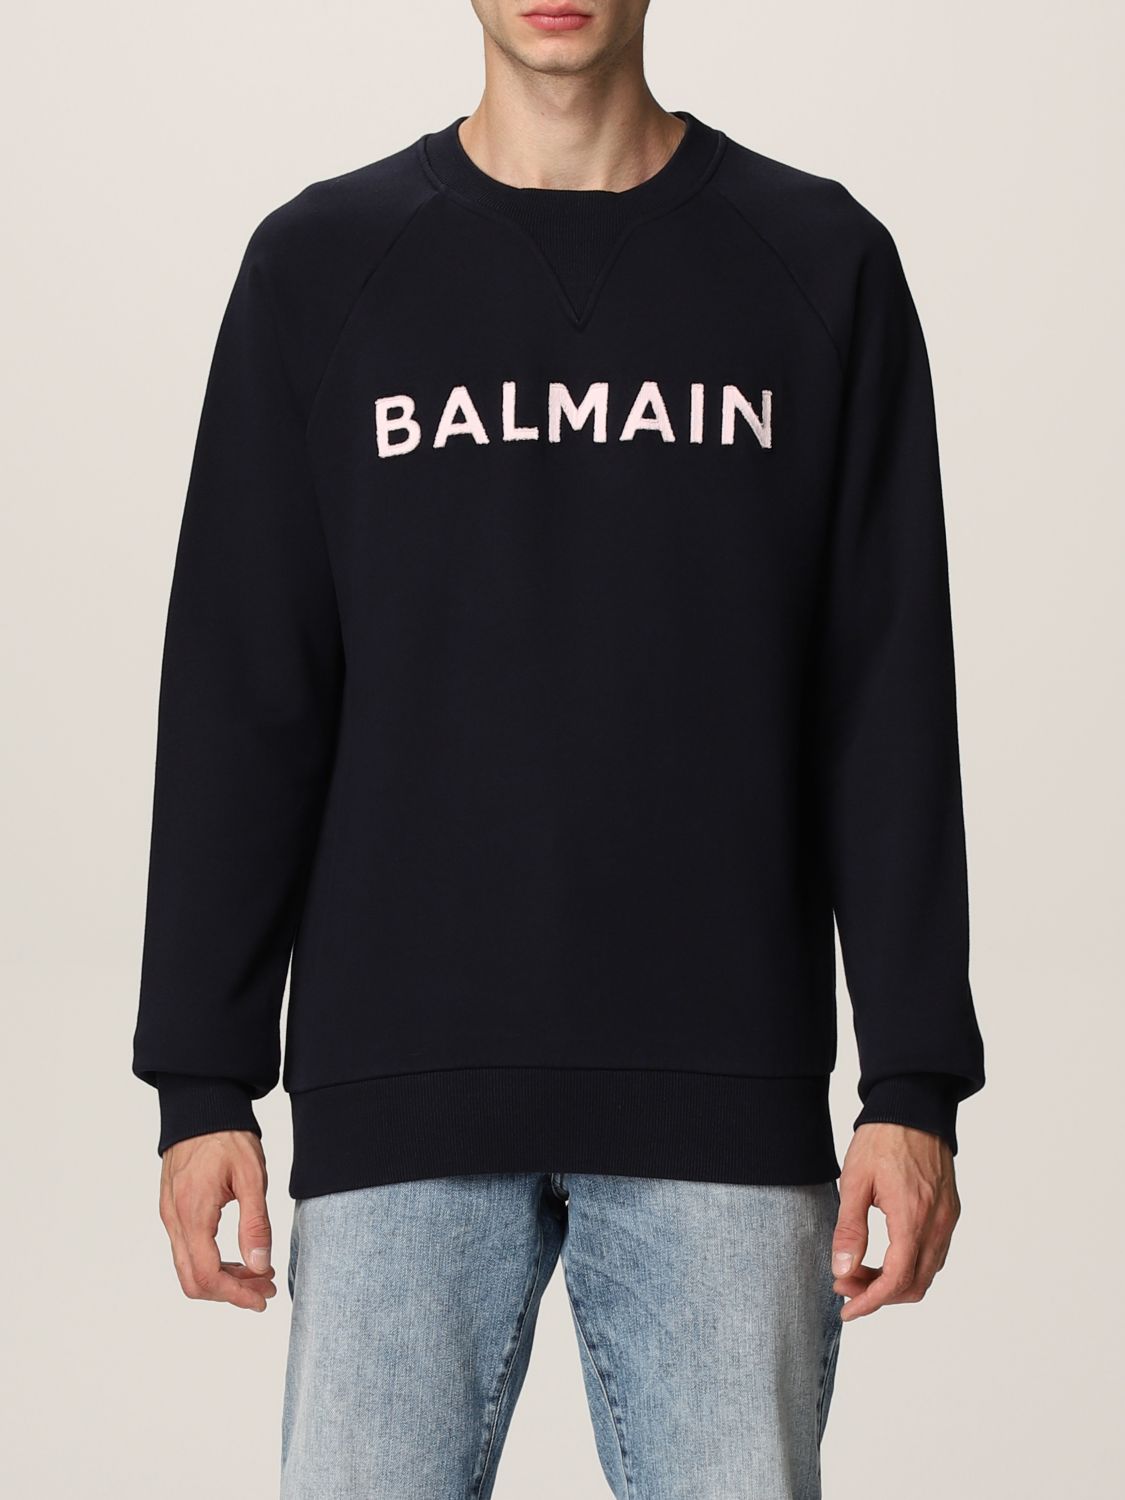 BALMAIN: cotton sweatshirt with logo - Navy | Balmain sweatshirt ...